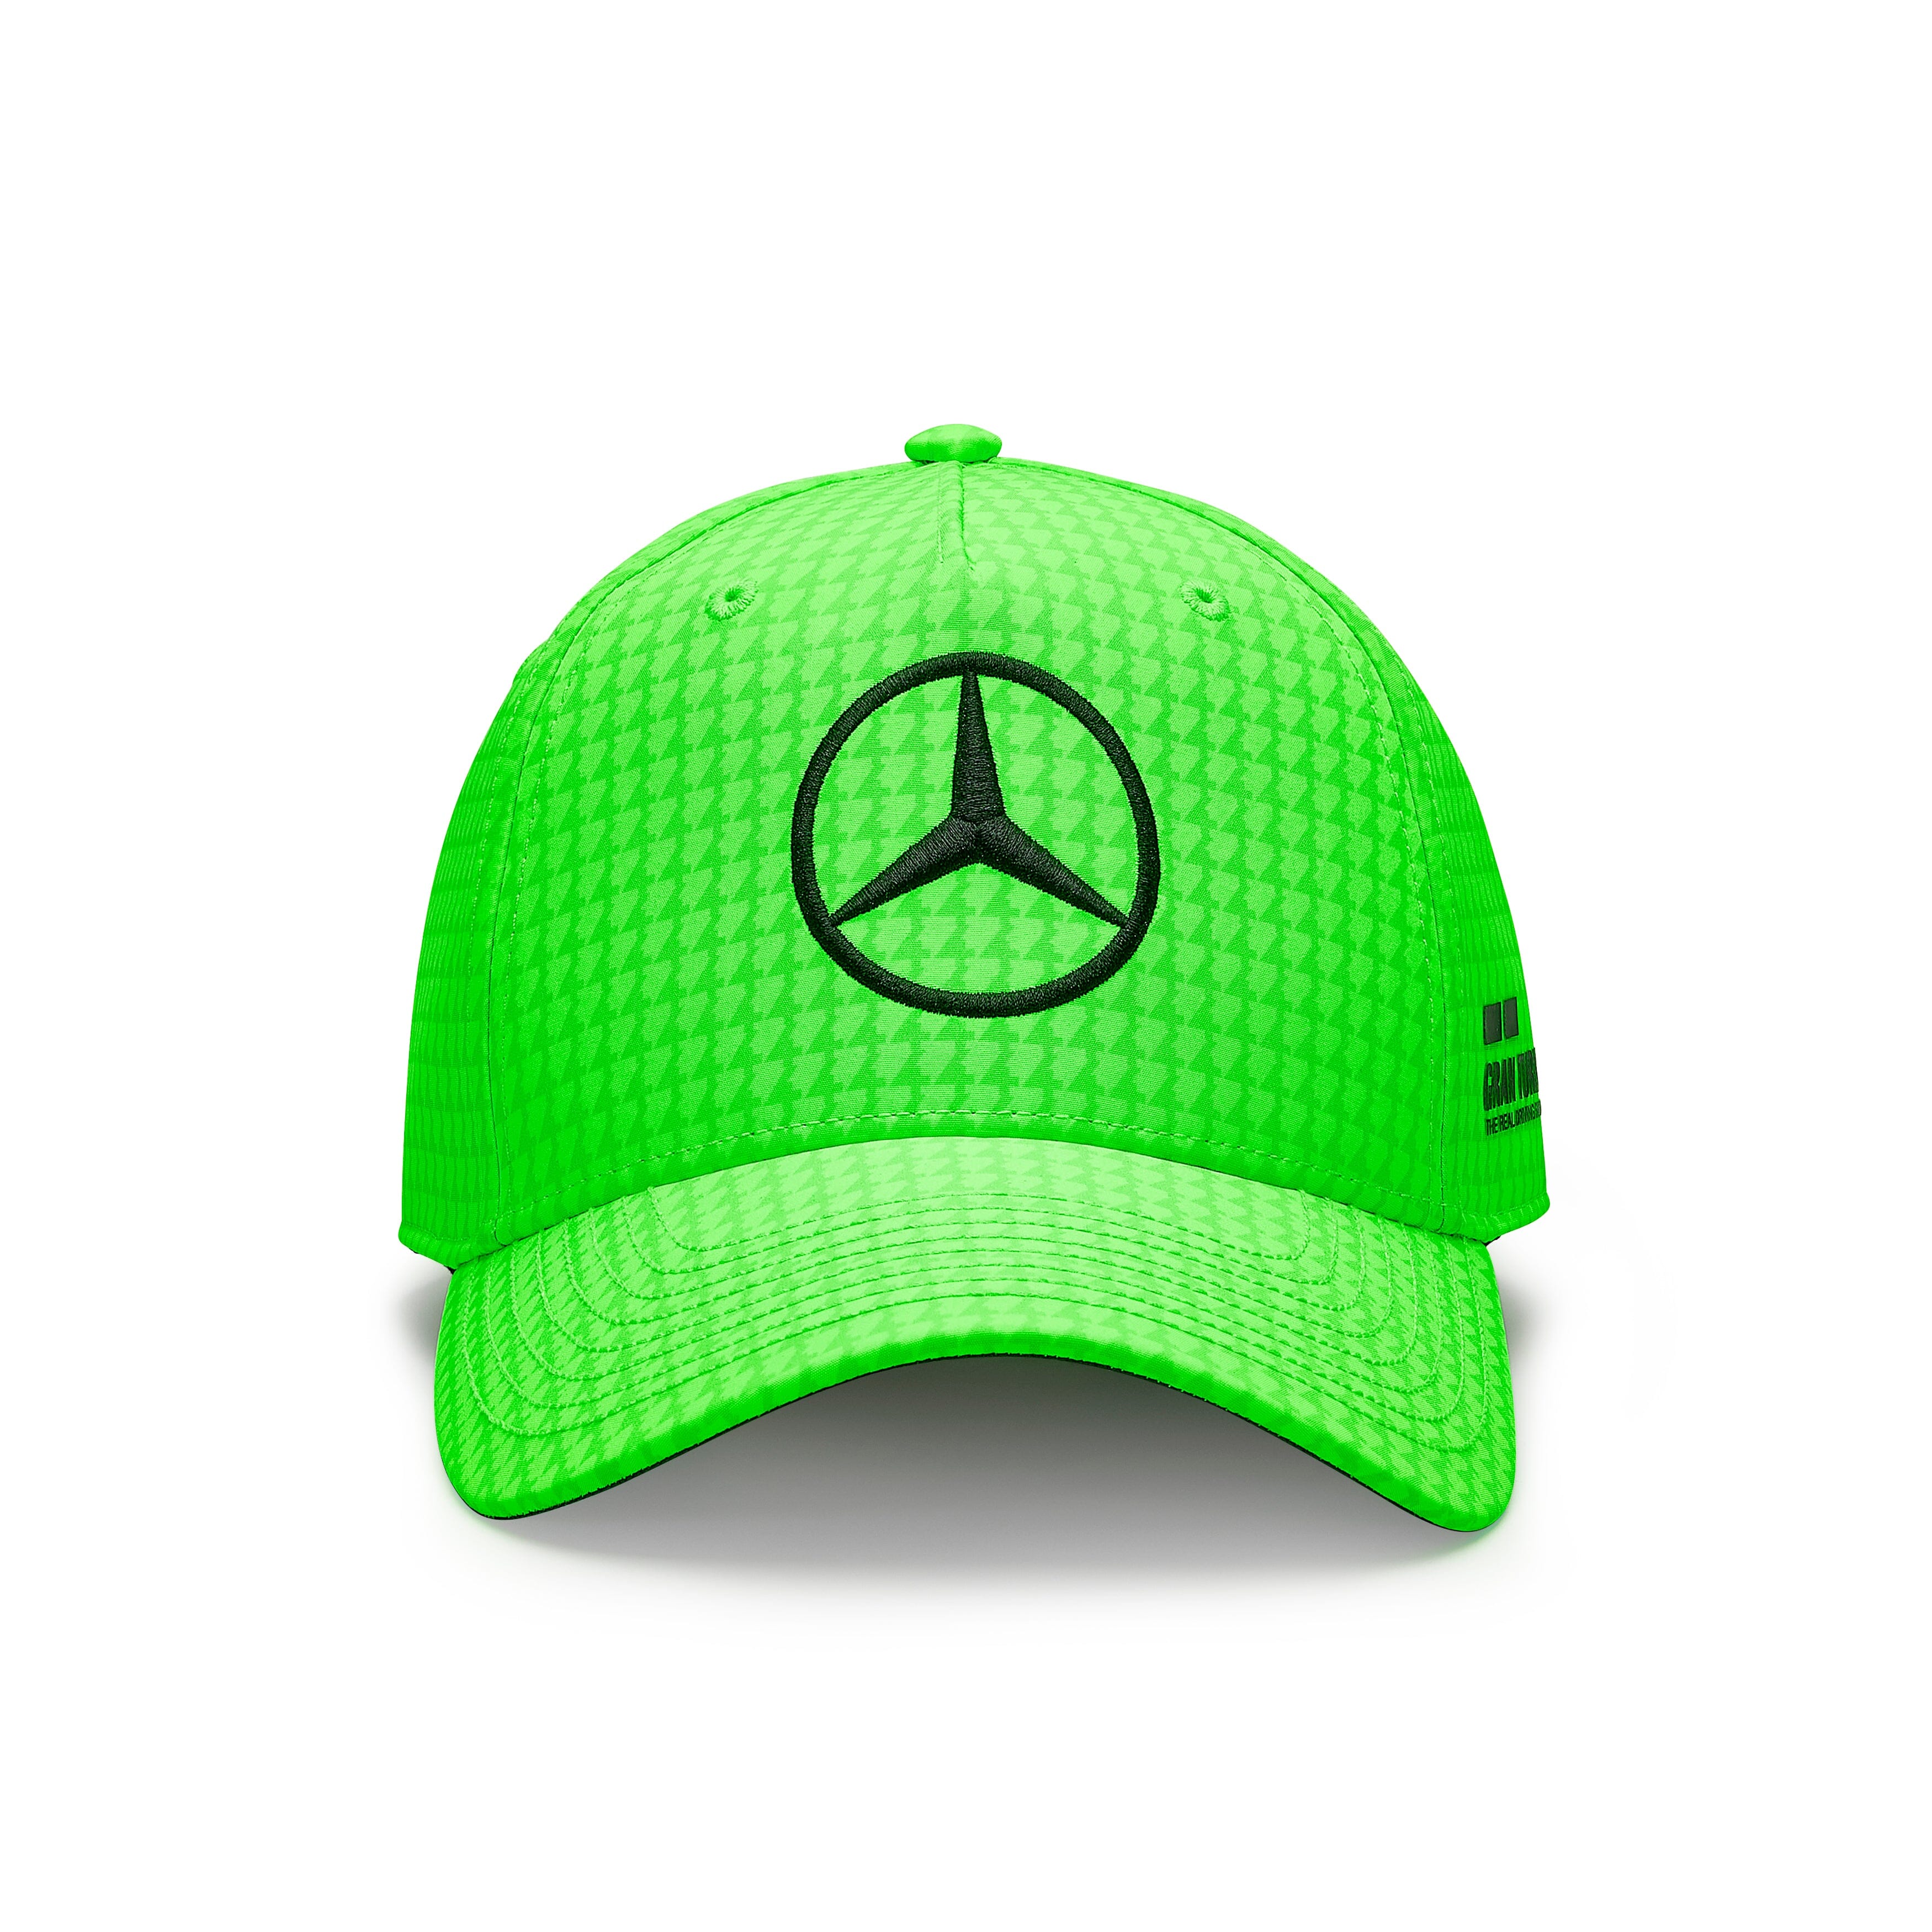 Mercedes AMG F1 Special Edition Lewis Hamilton Silverstone GP Hat- Green